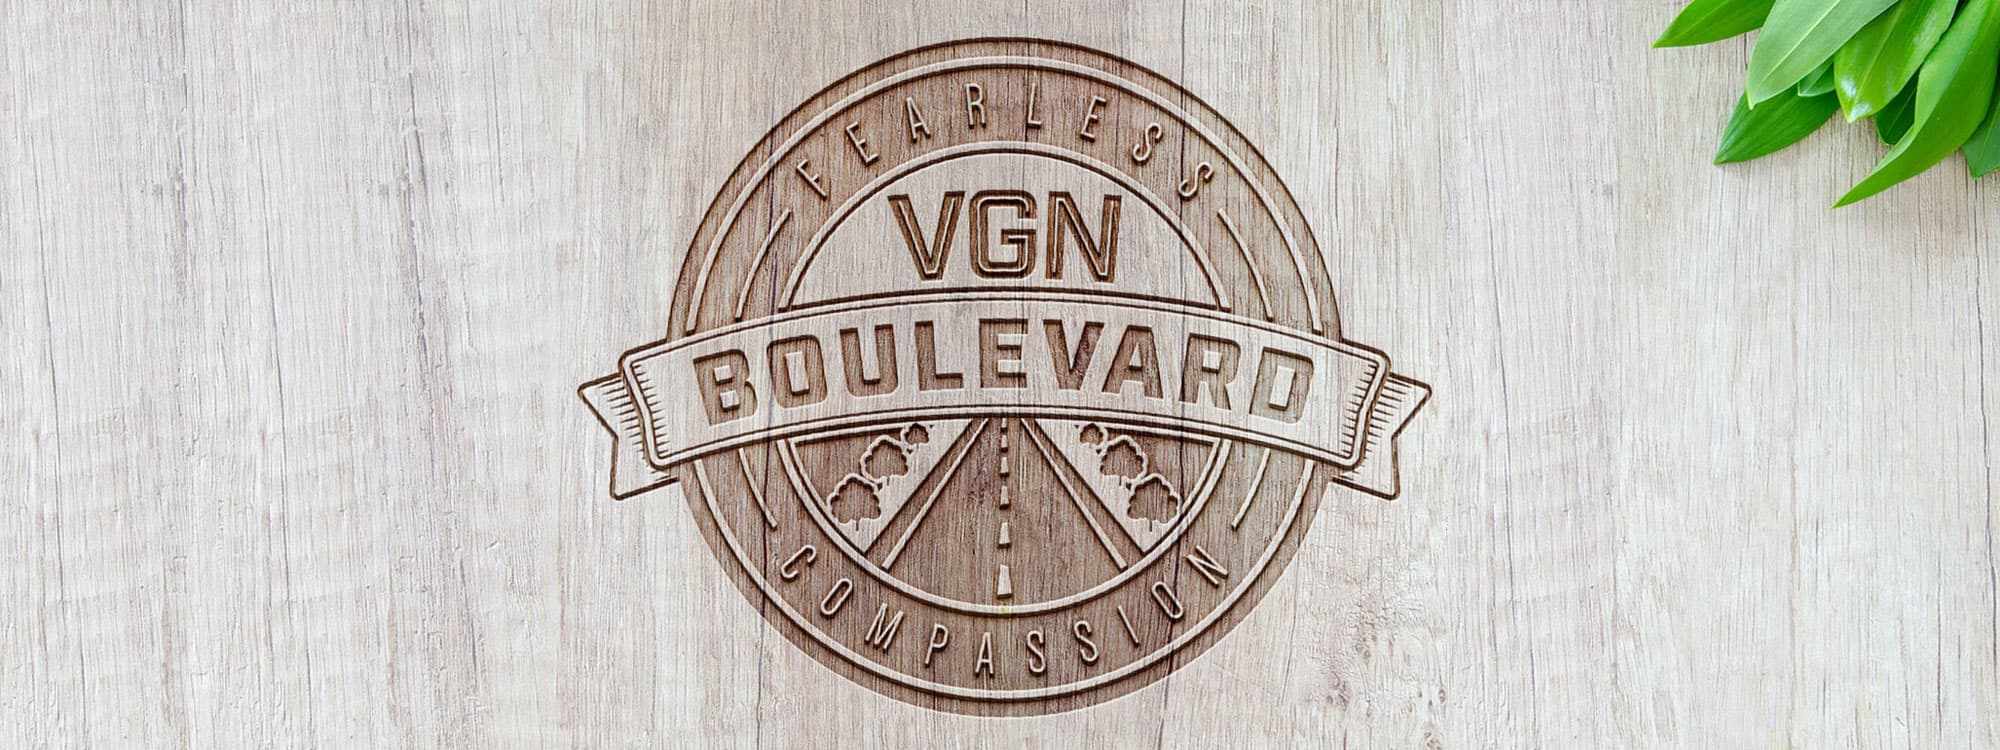 Vegan Street Food Logo Design